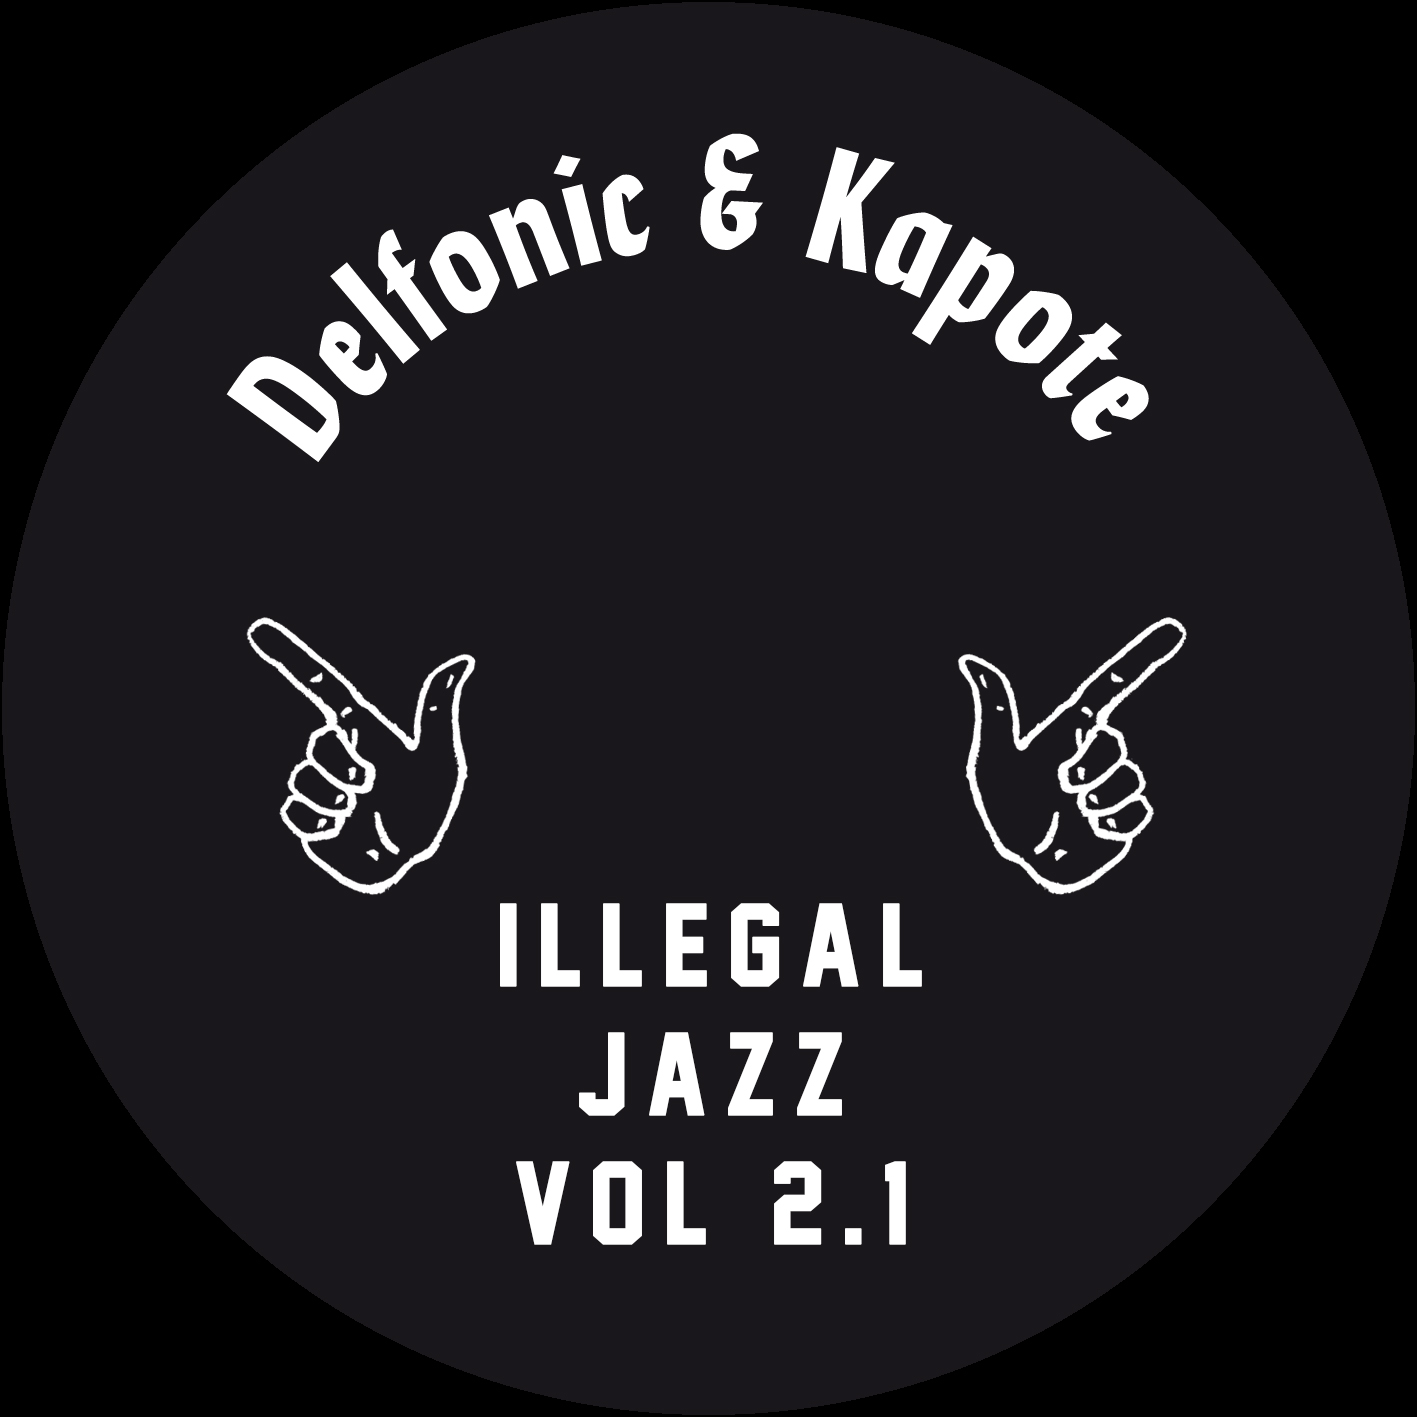 Delfonic & Kapote – Illegal Jazz Vol. 2.1 [IJR002.1]